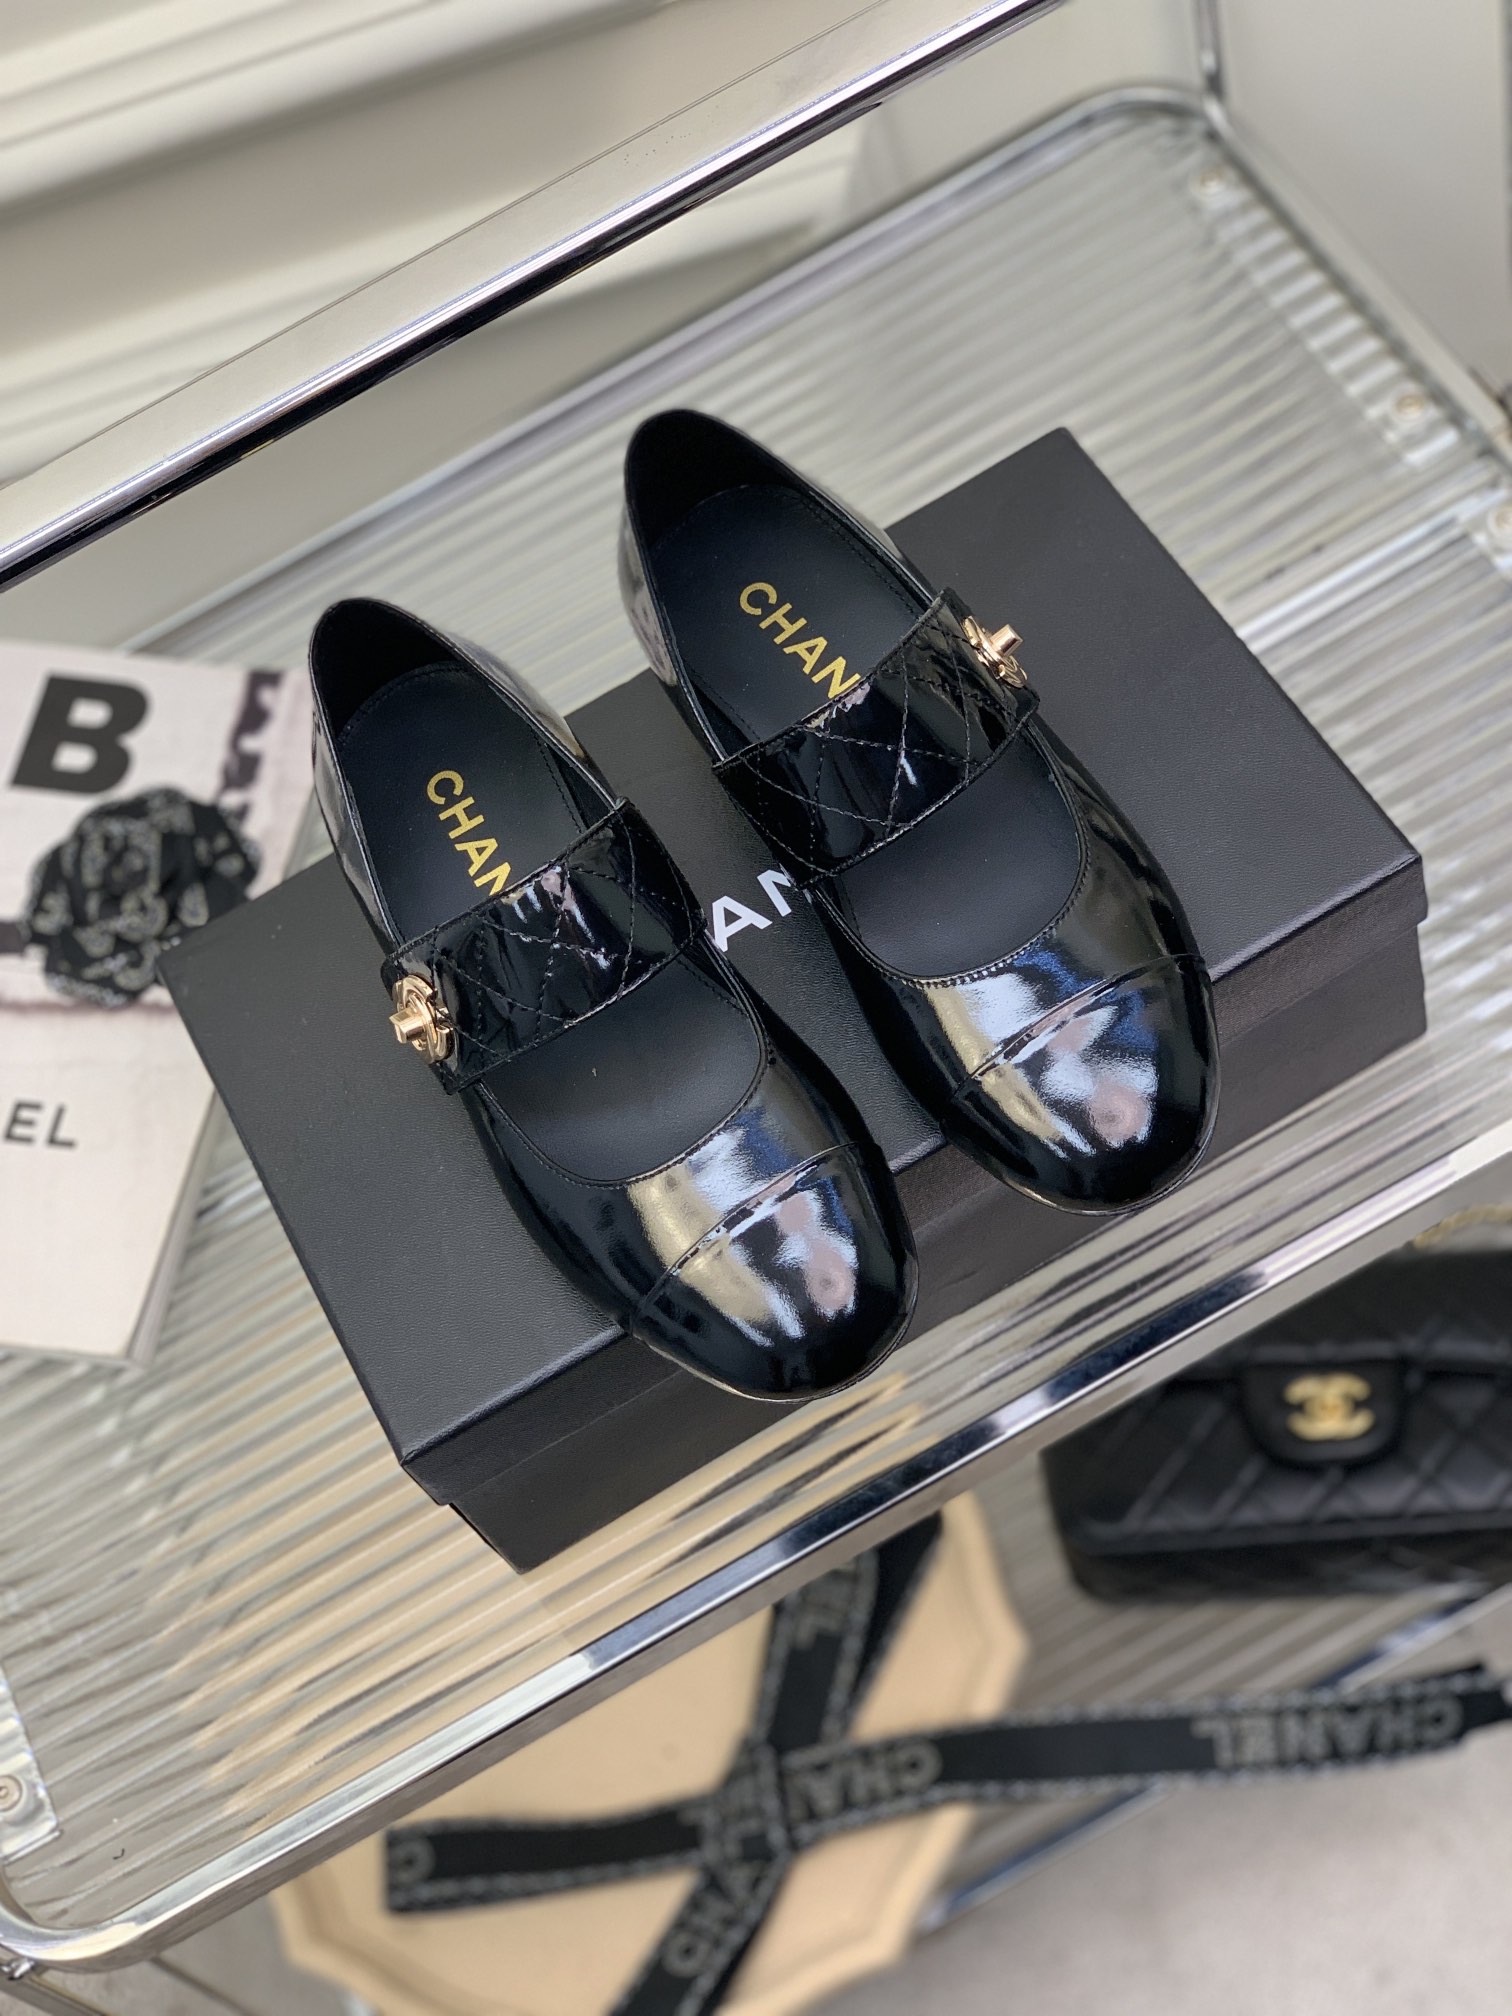 Chanel 23 pop mary jane heels